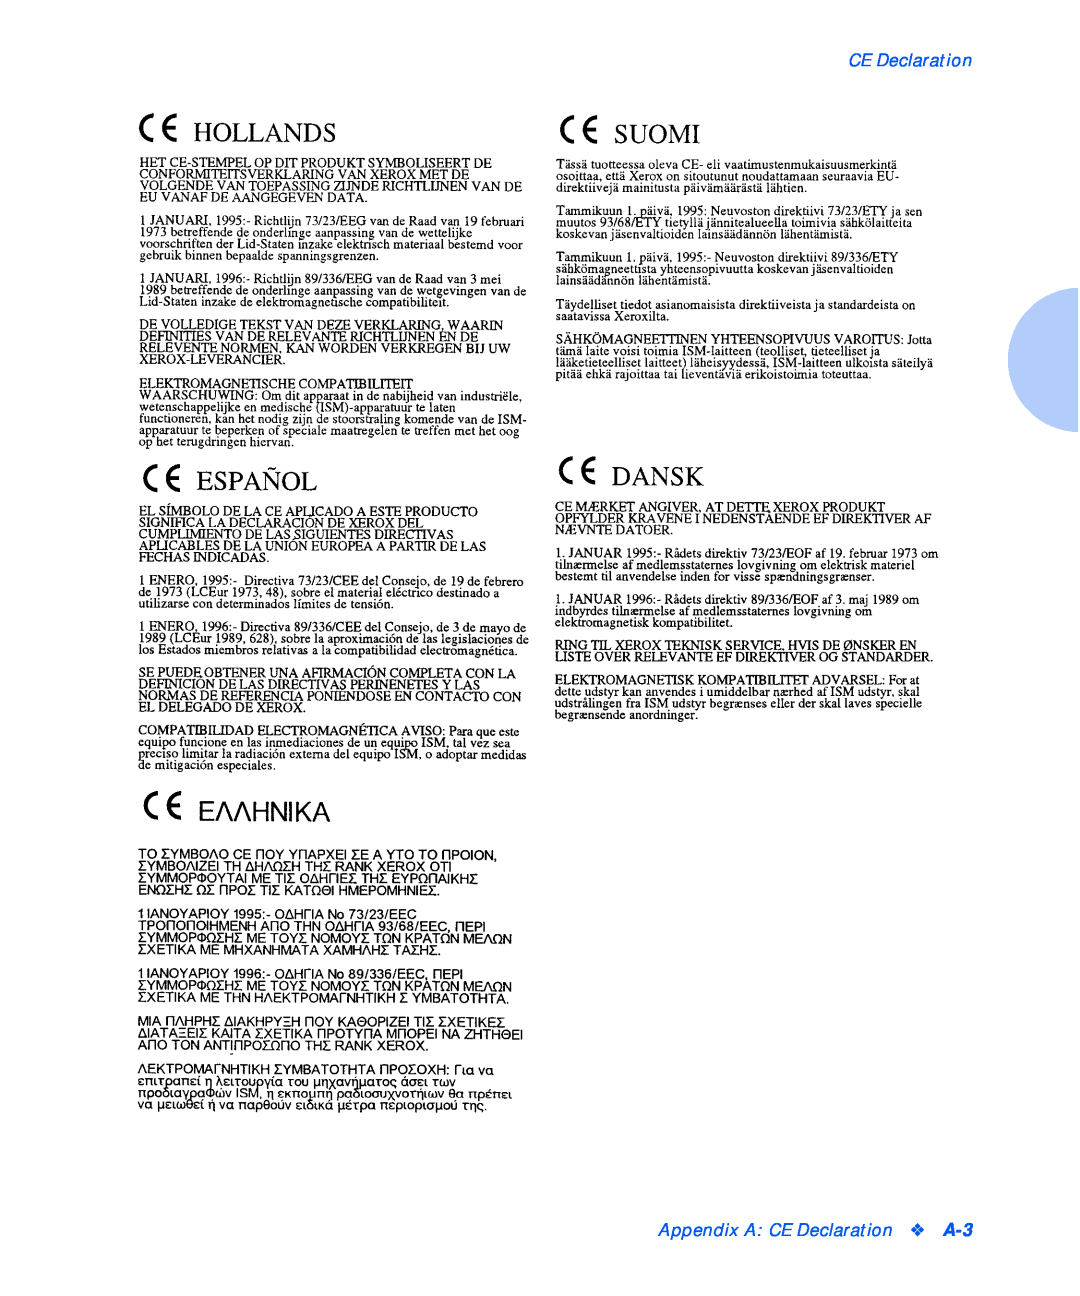 Xerox N17b manual Appendix A: CE Declaration A-3 